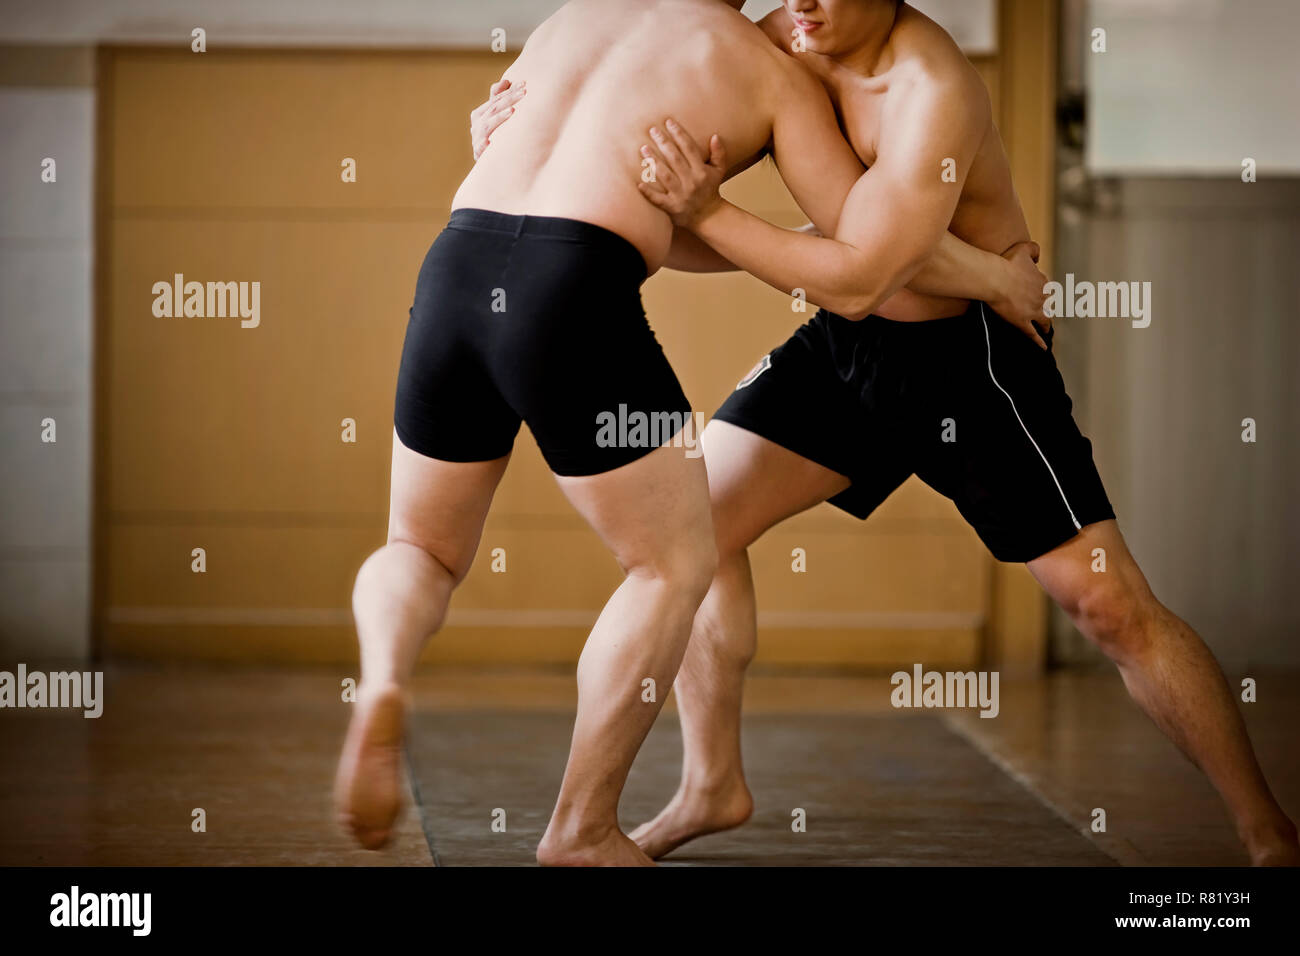 Two men wrestling Stock Photo - Alamy